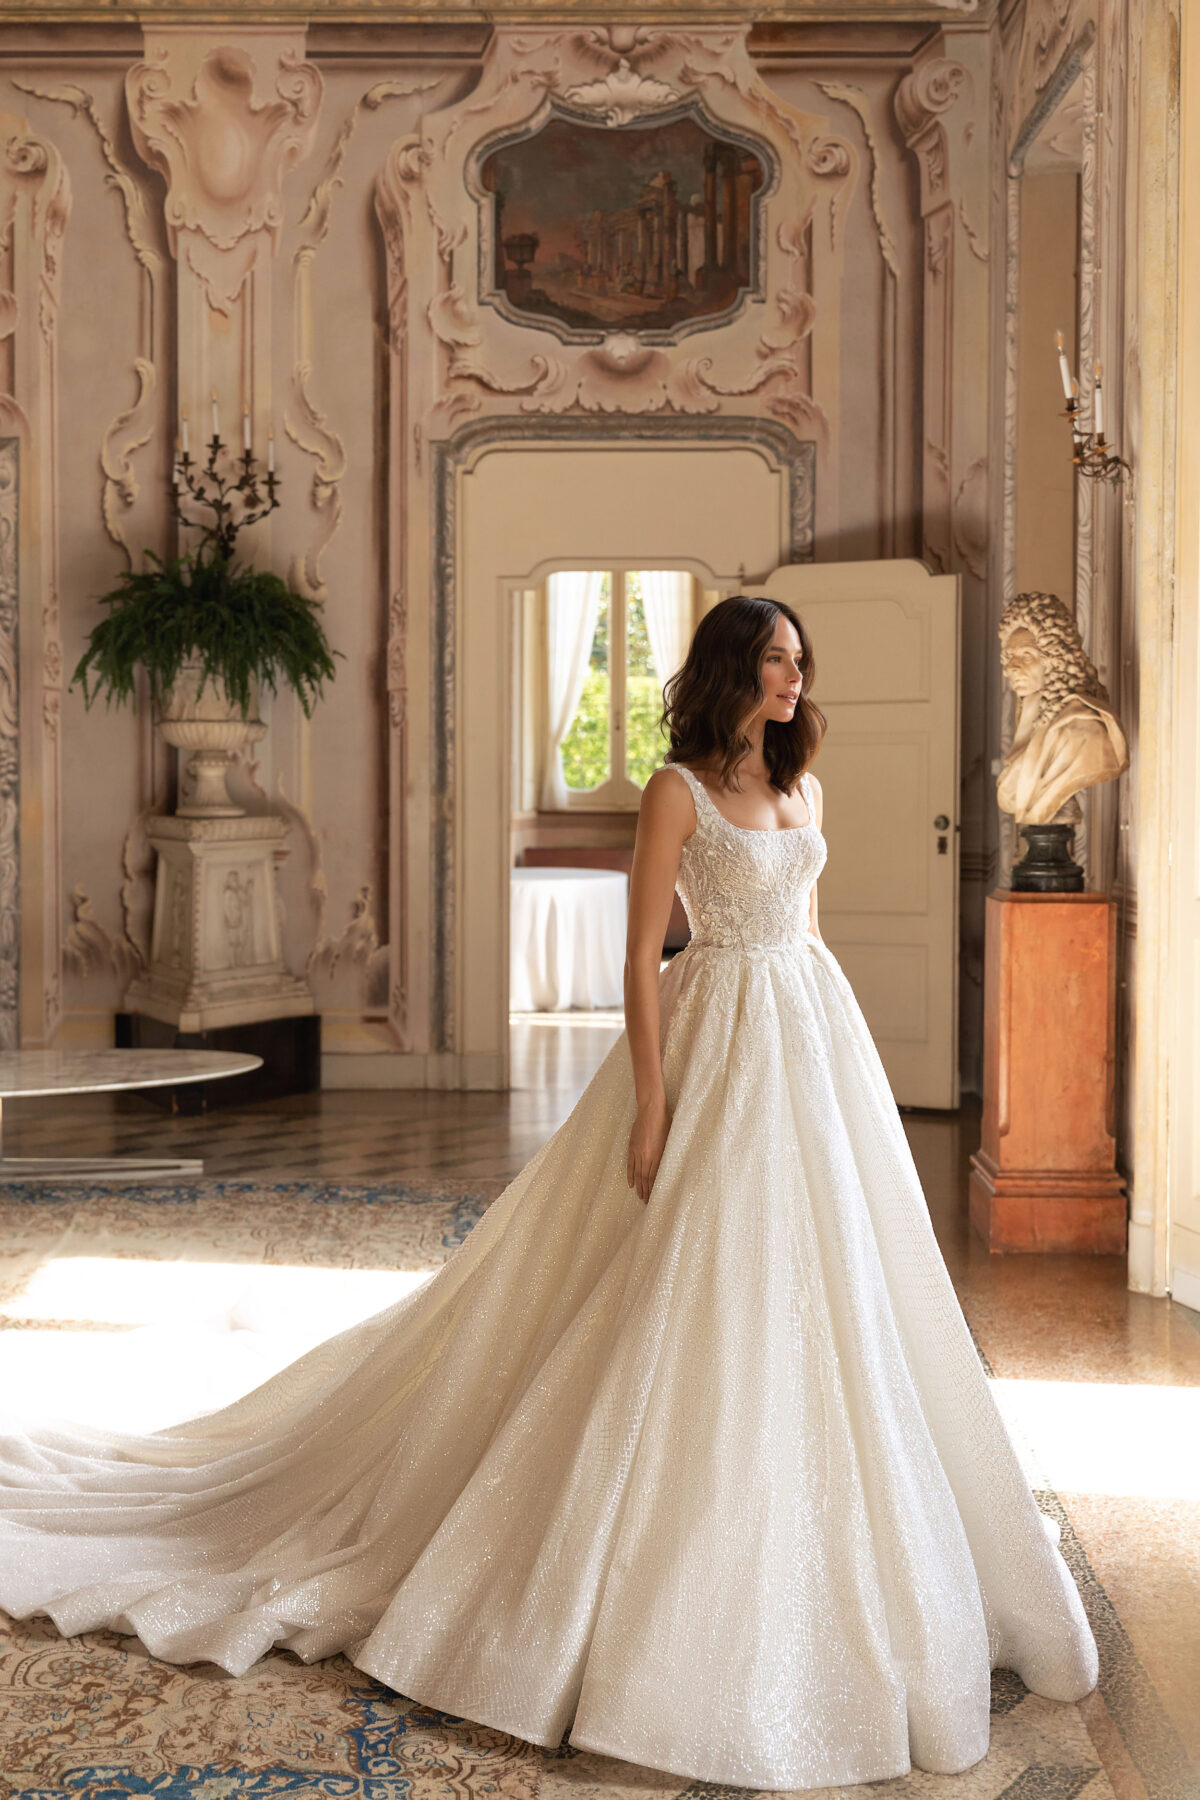 Sparkly elegant ball gown wedding dresses - Rossella